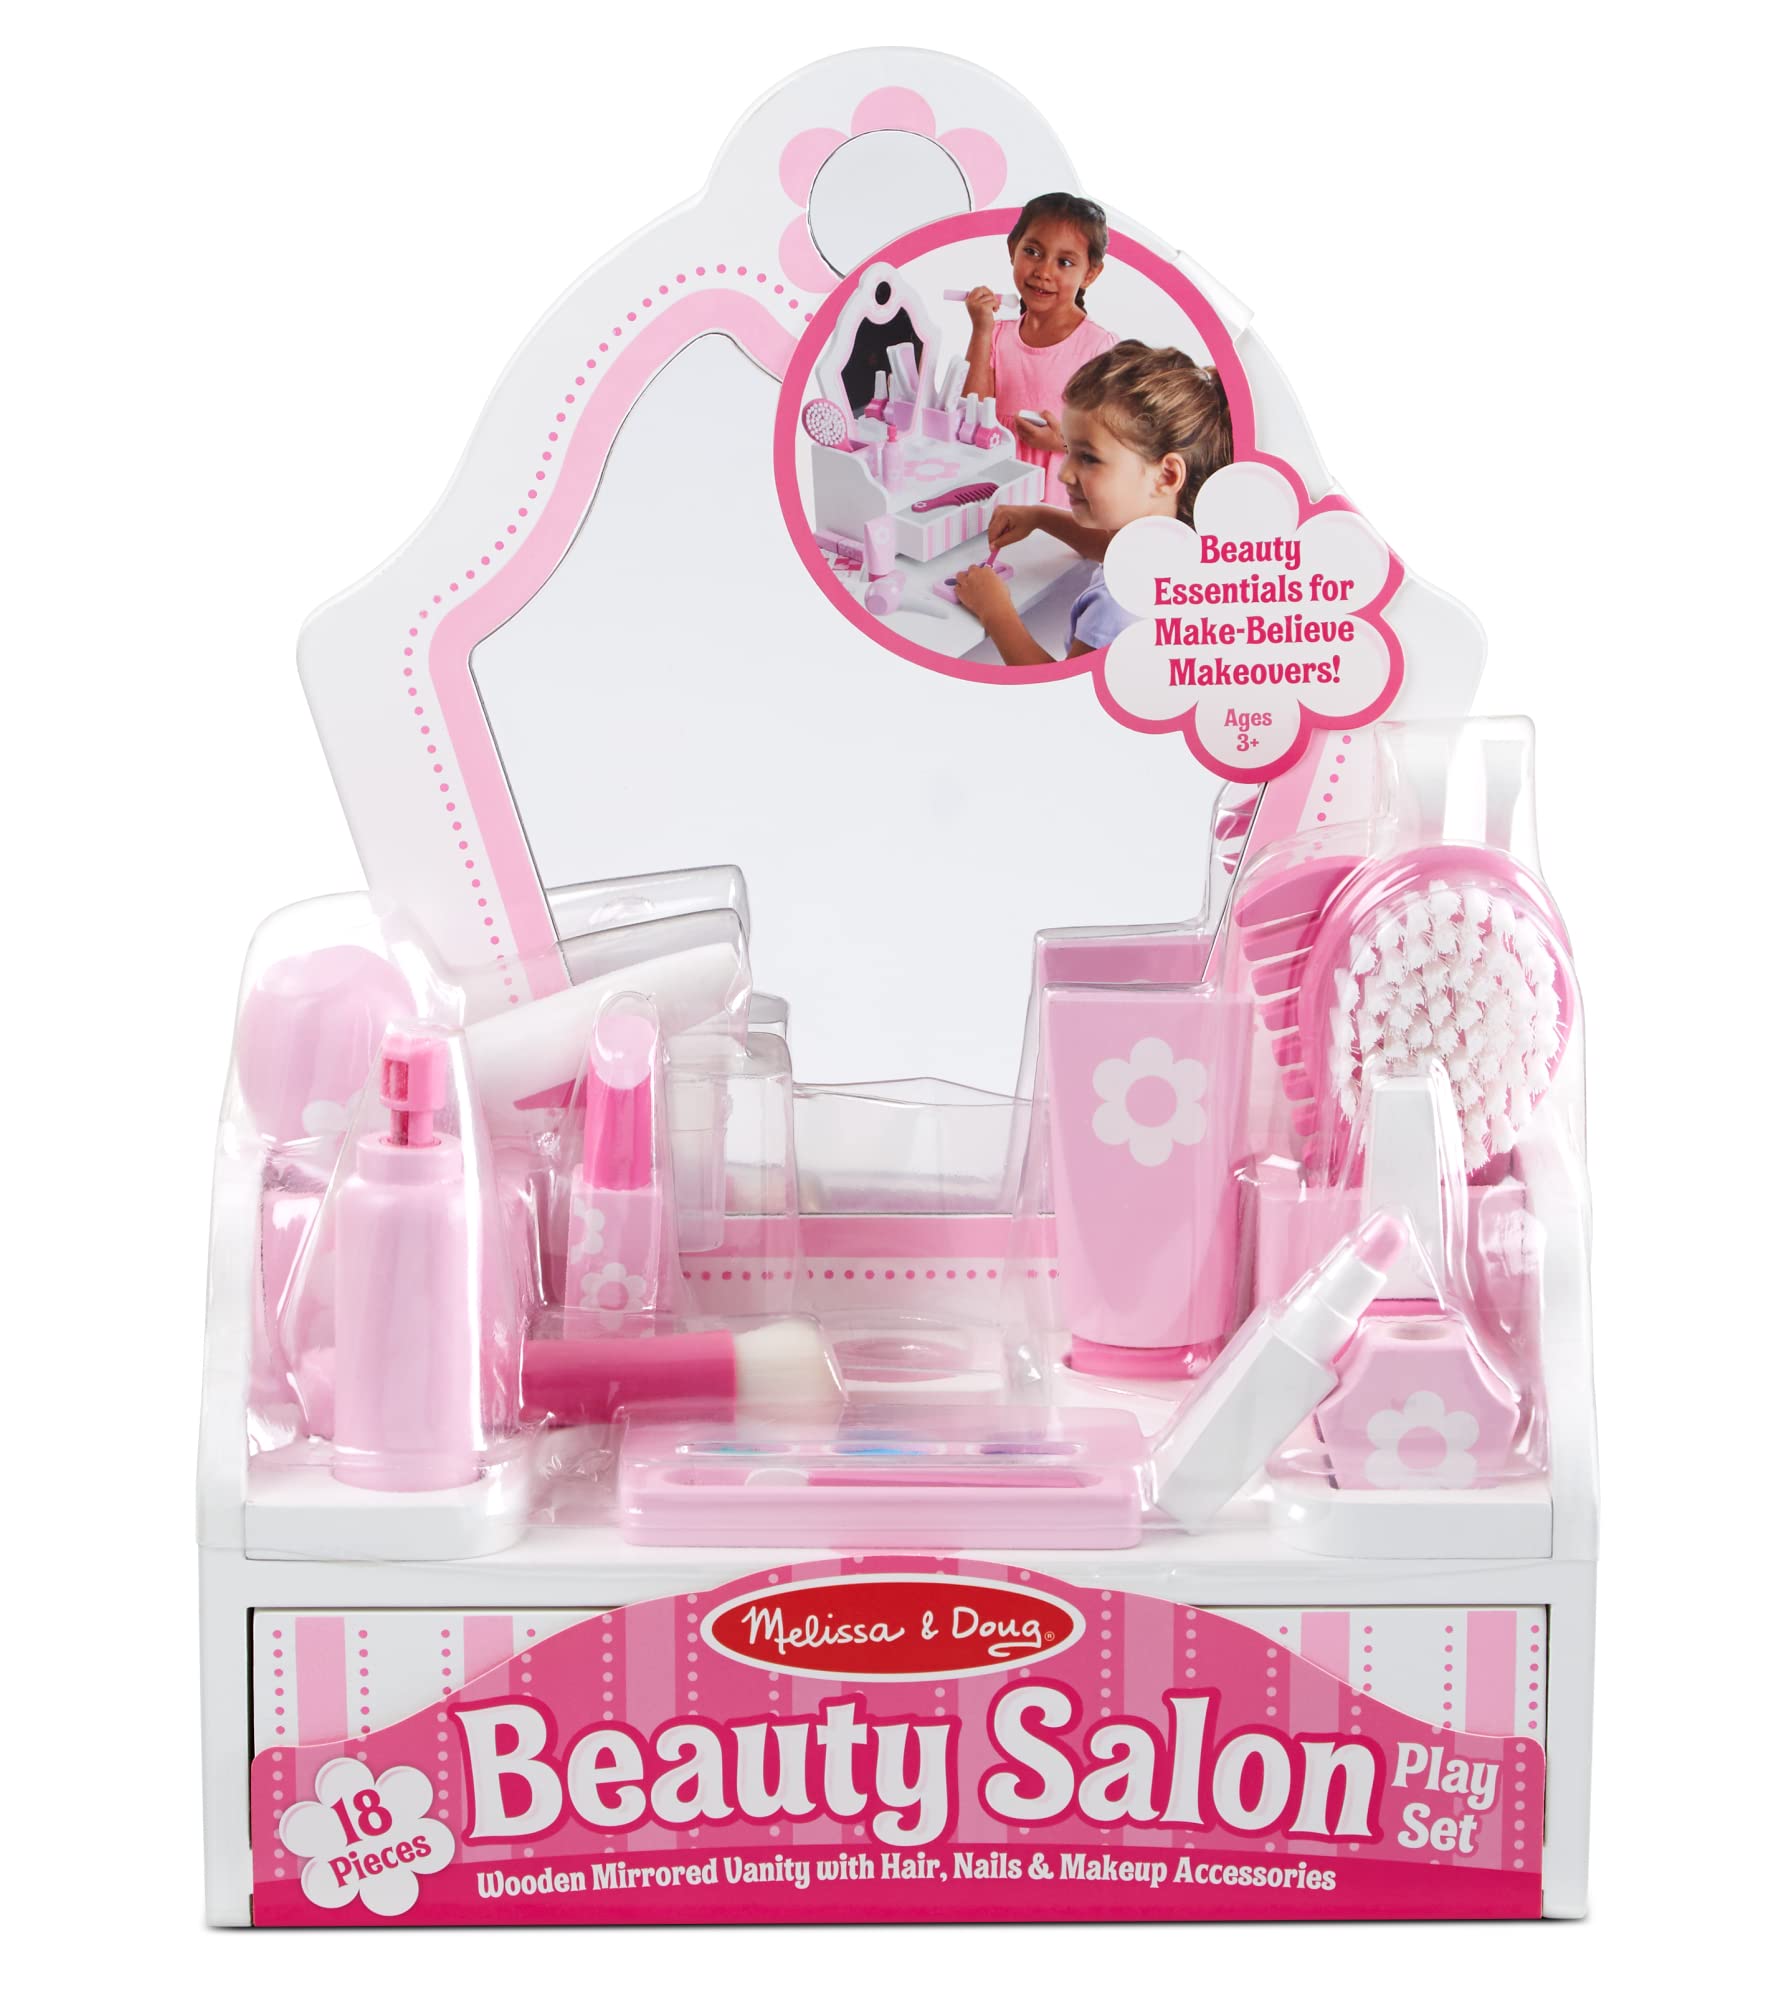 Melissa & Doug Wooden Beauty Salon Play Set With Accessories (18 pcs) - Pretend Hair Salon, Toddler Makeup Vanity, Fashion Role For Kids Ages 3+